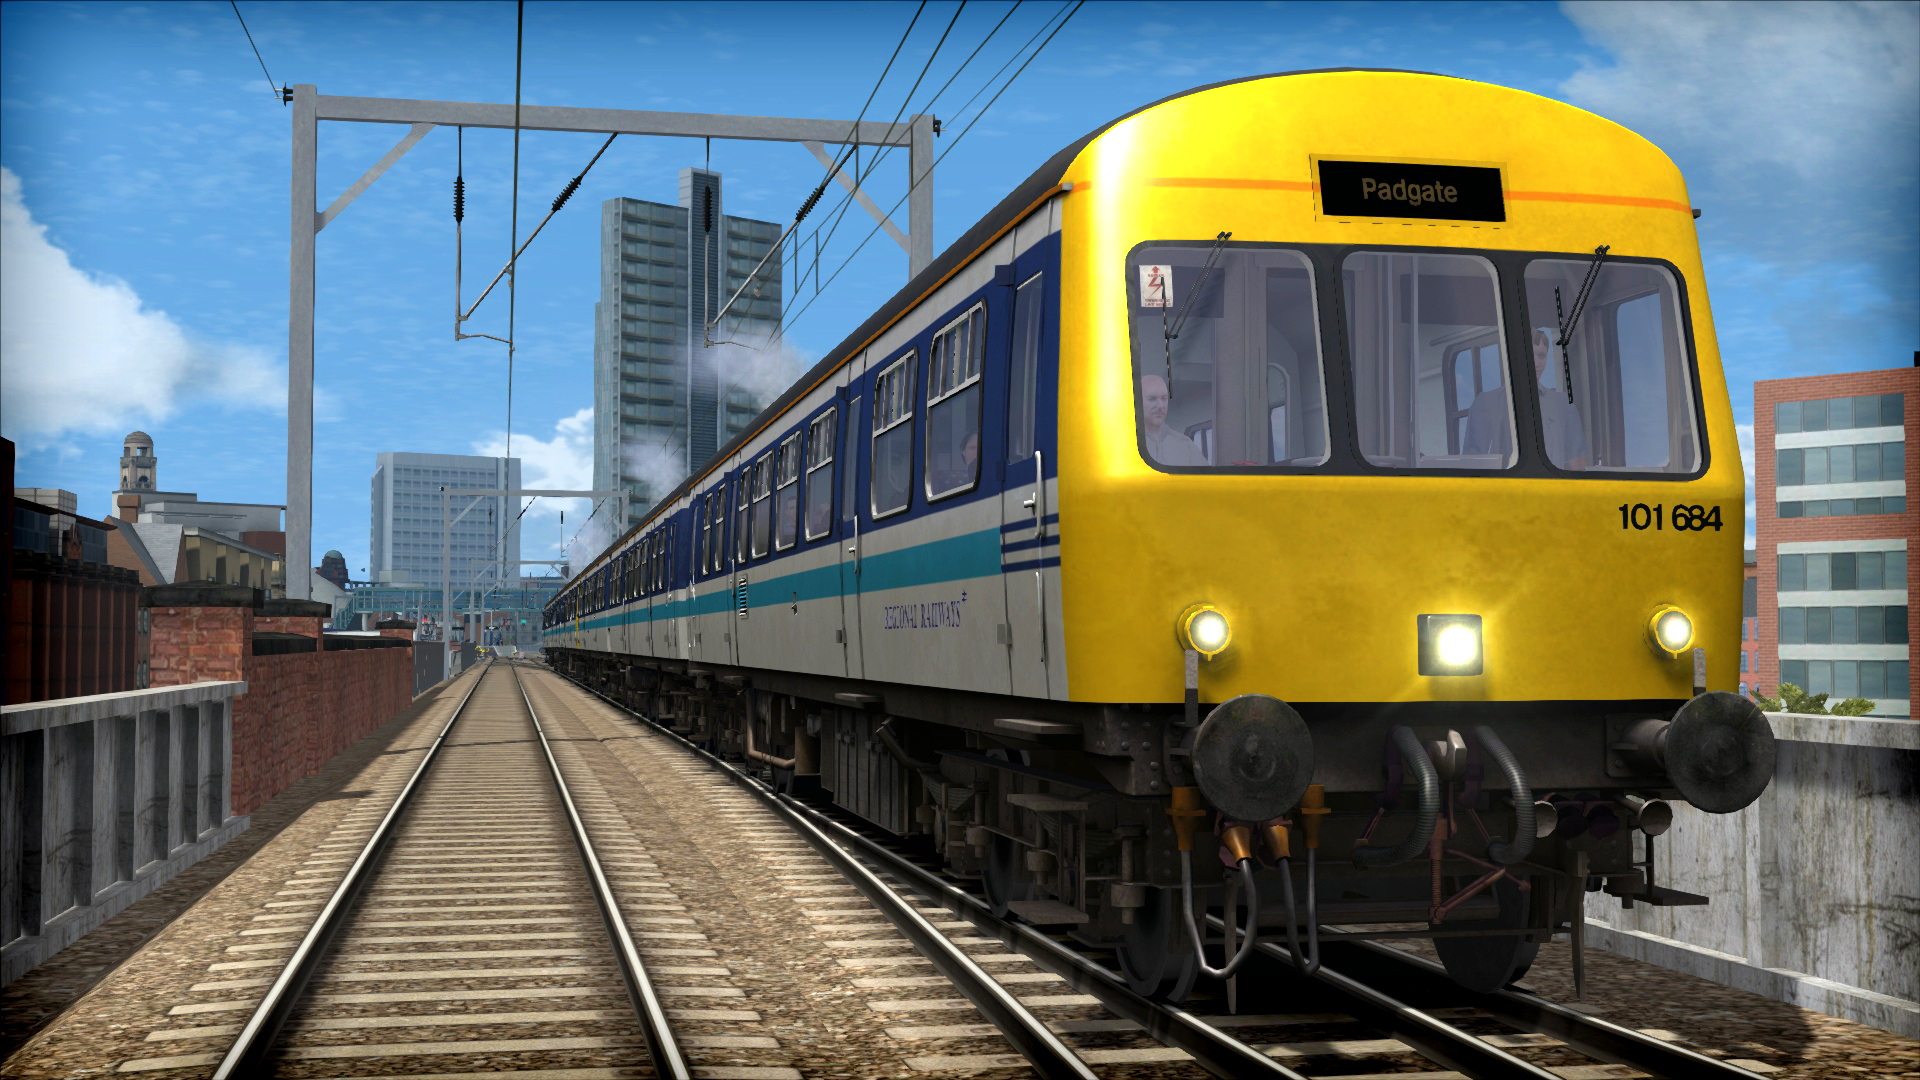 run 8 train simulator